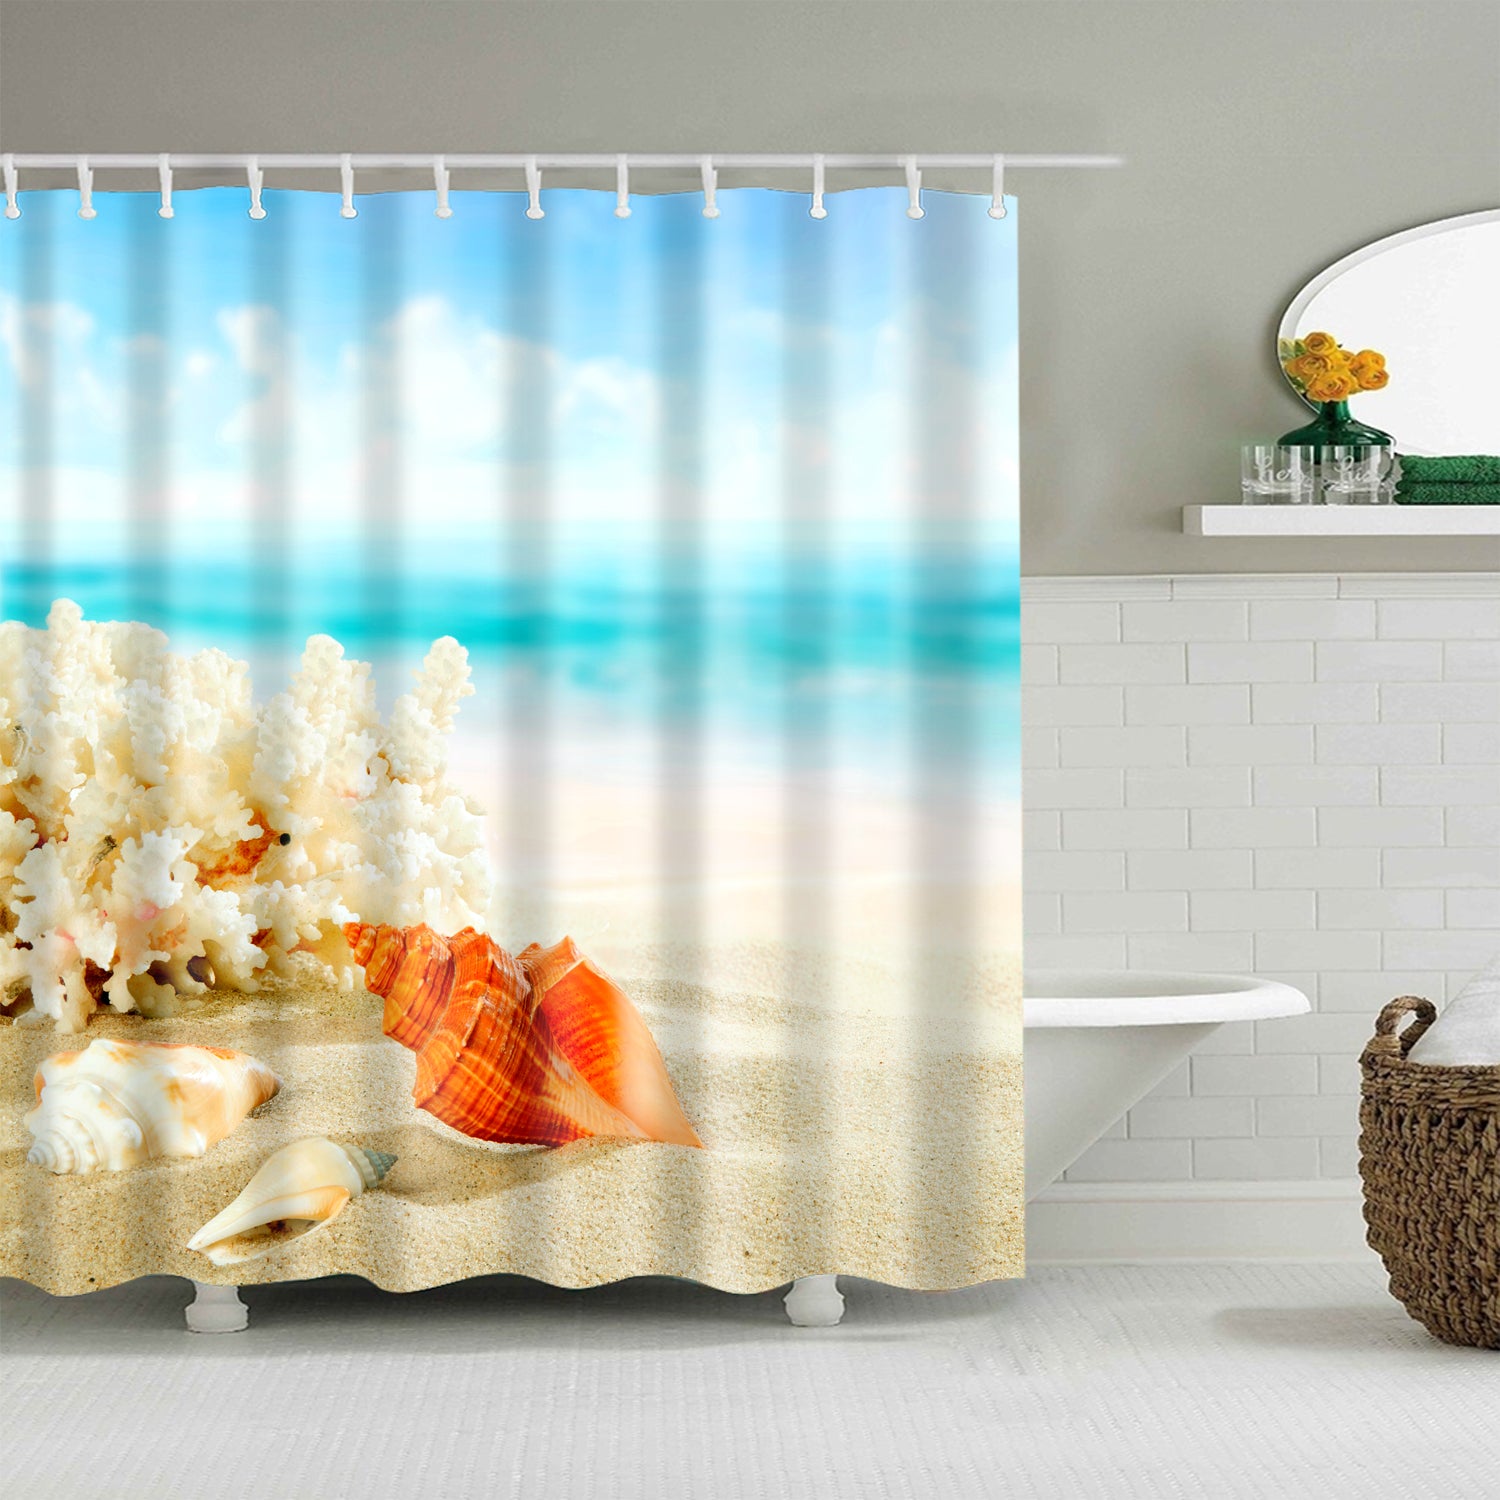 2019 Orange Conch Shower Curtain Summer Beach Sand Coral With Conch Bathroom Curtains